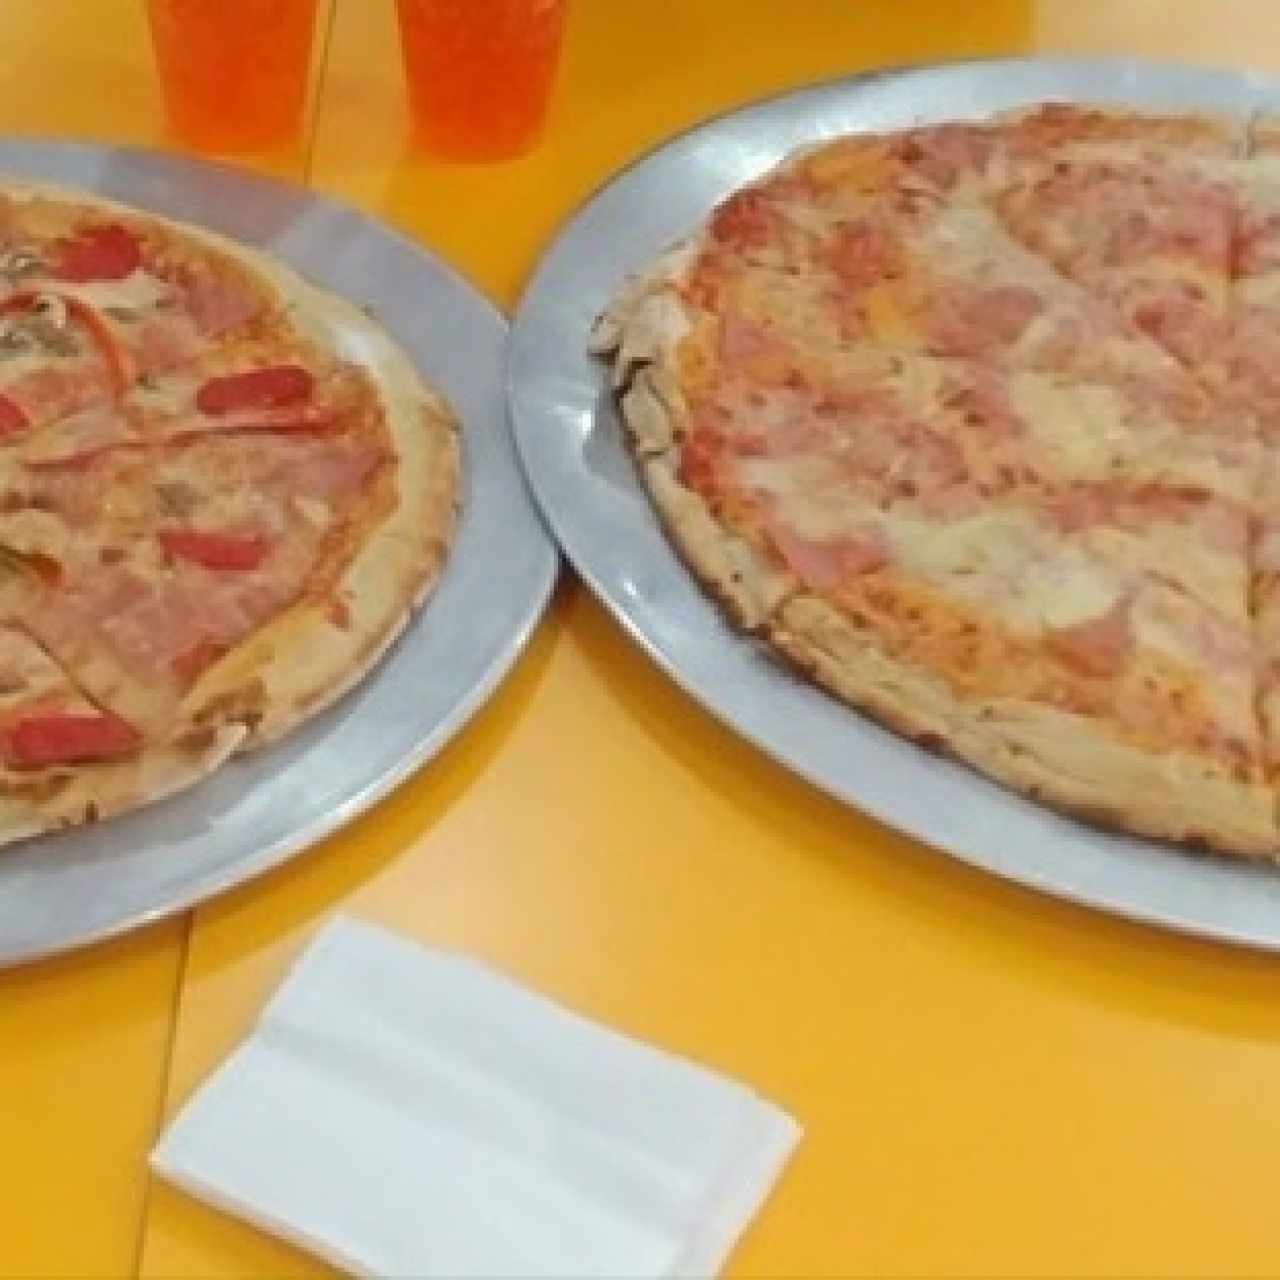 pizza mediana 6 ingredientes y pizza familiar 1 ingrediente